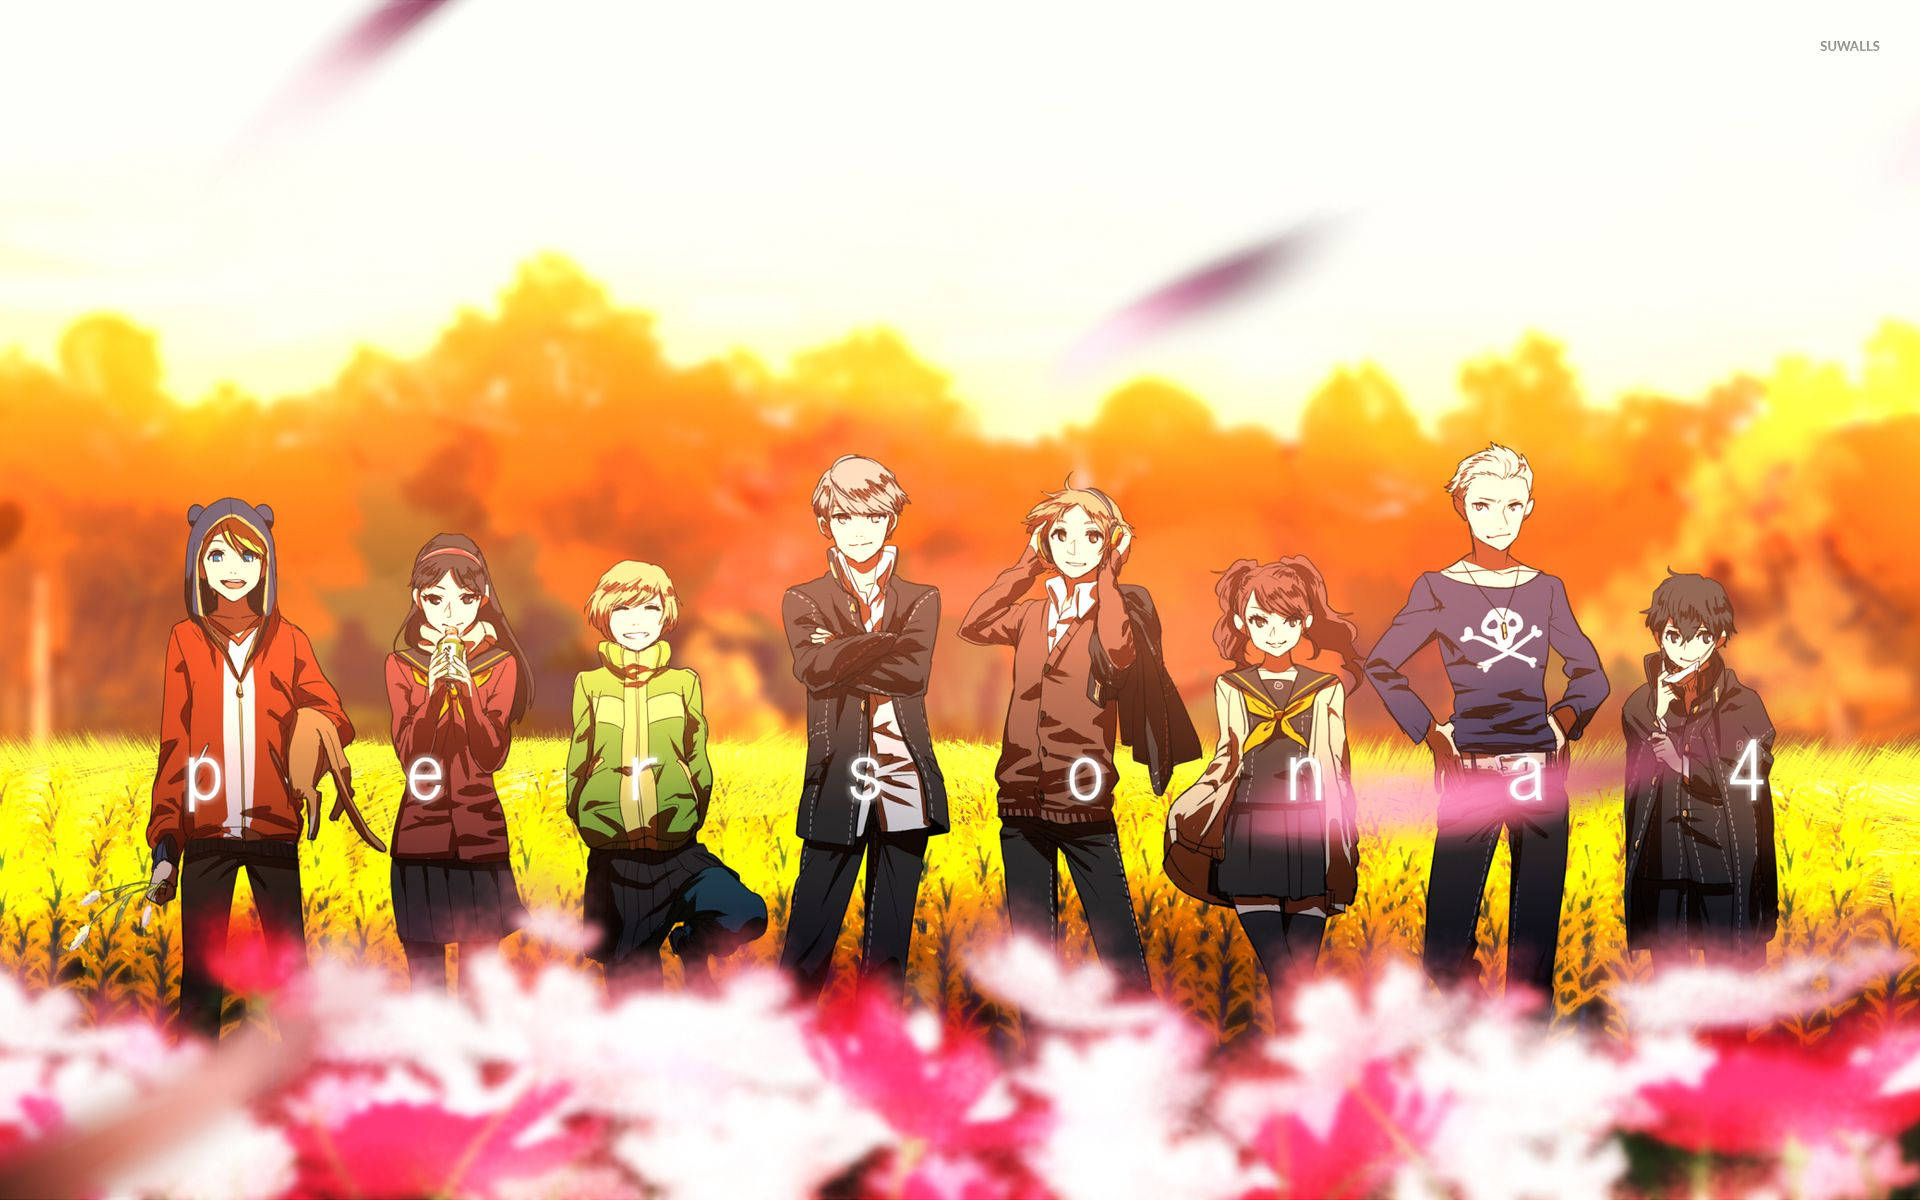 Persona 4 Cast Enjoying a Day on a Golden Field Wallpaper